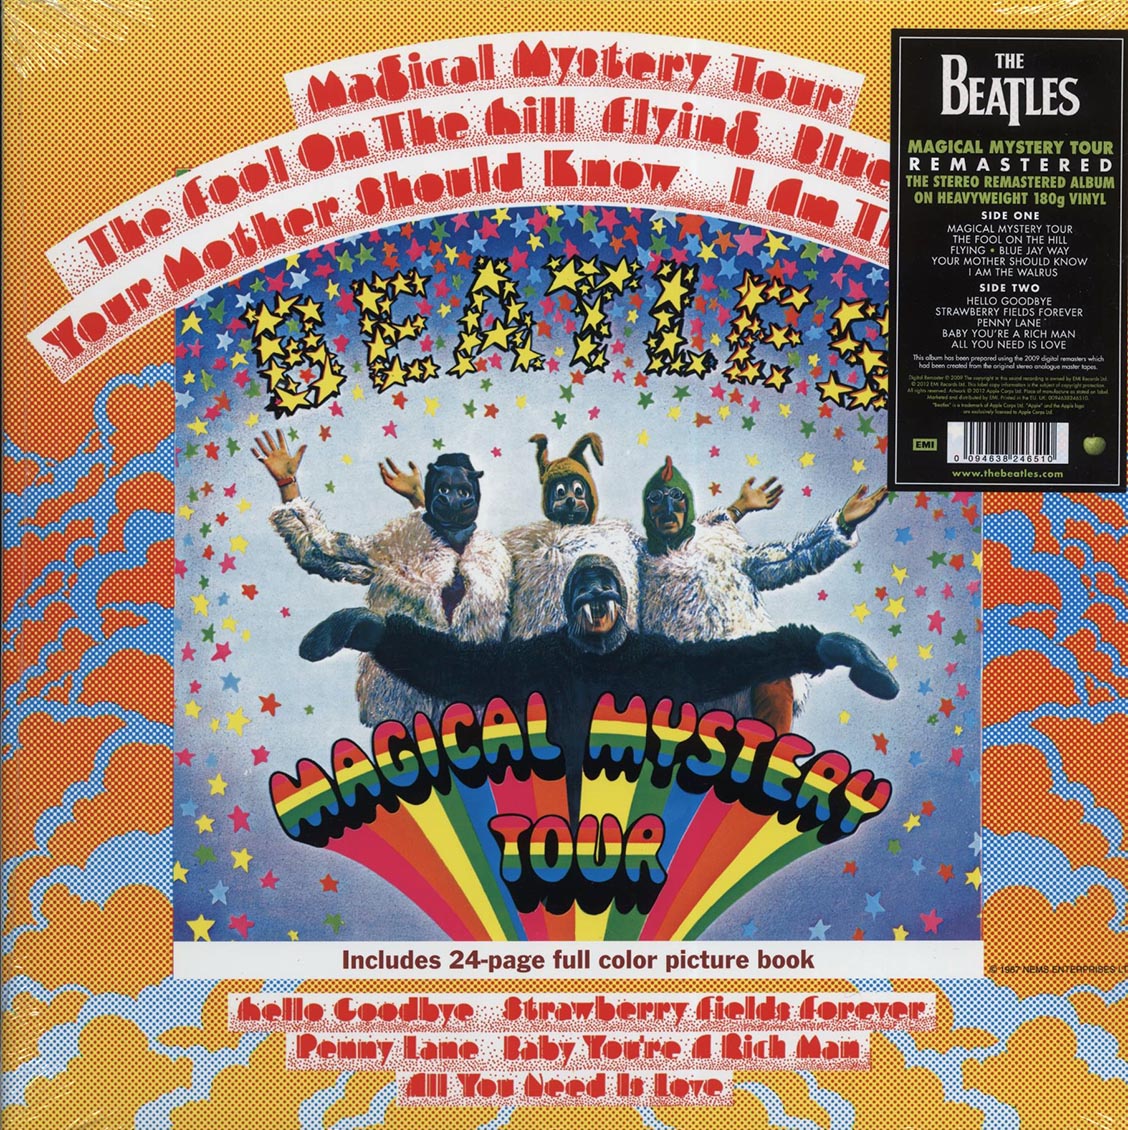 The Beatles - Magical Mystery Tour [2012 Remasterd 180G] [New Vinyl Record LP]